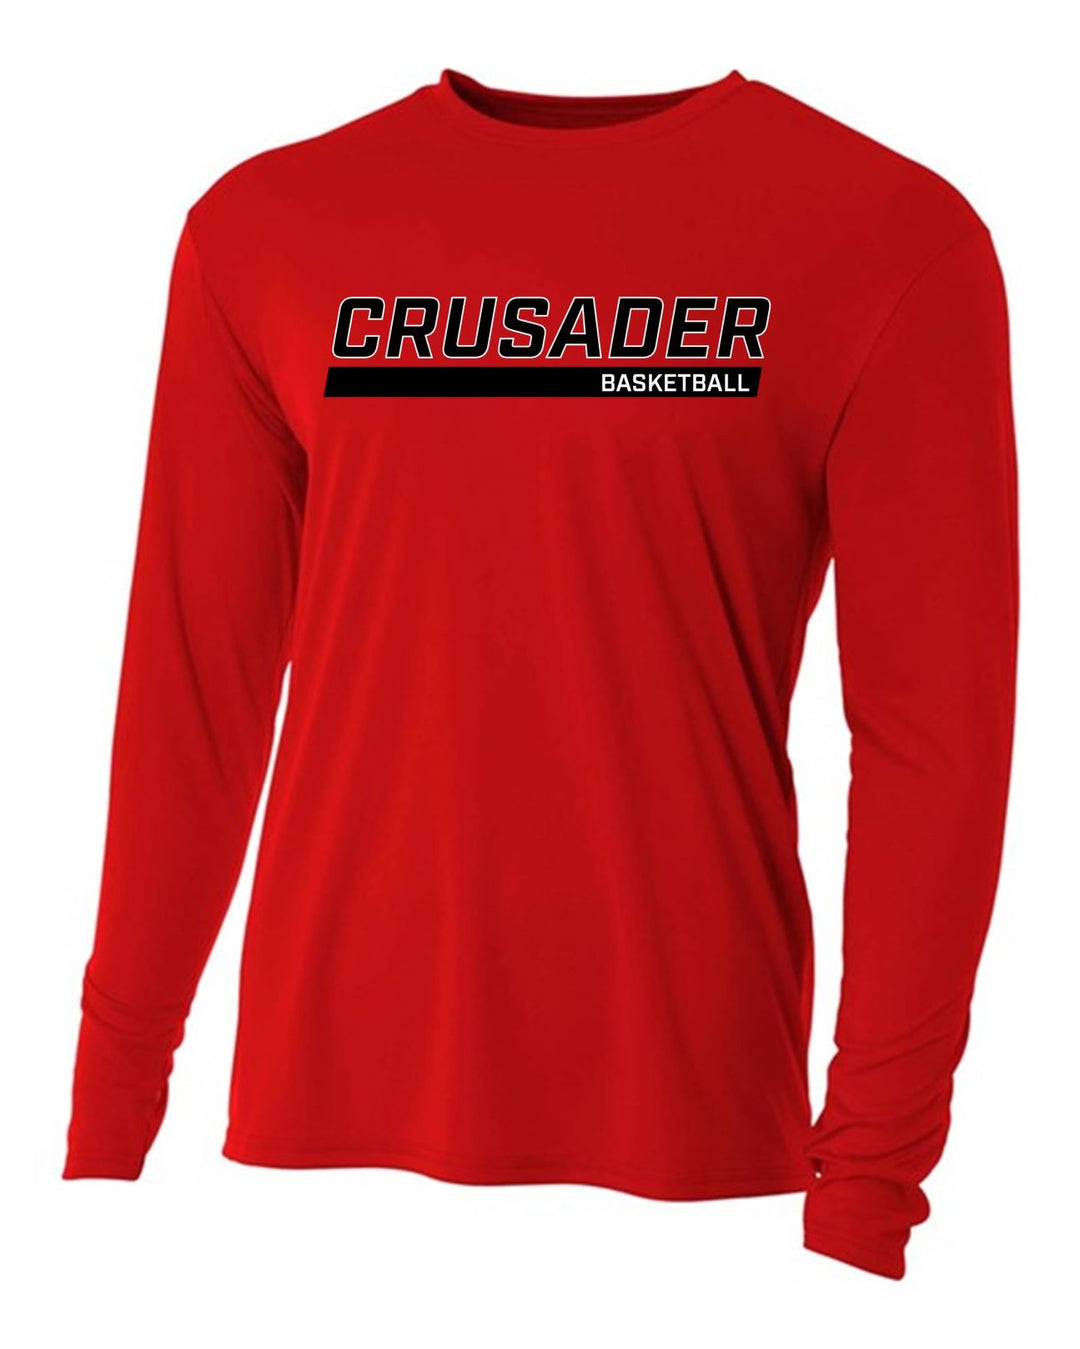 WCU Basketball Youth Long-Sleeve Performance Shirt WCU Basketball Red CRUSADER - Third Coast Soccer